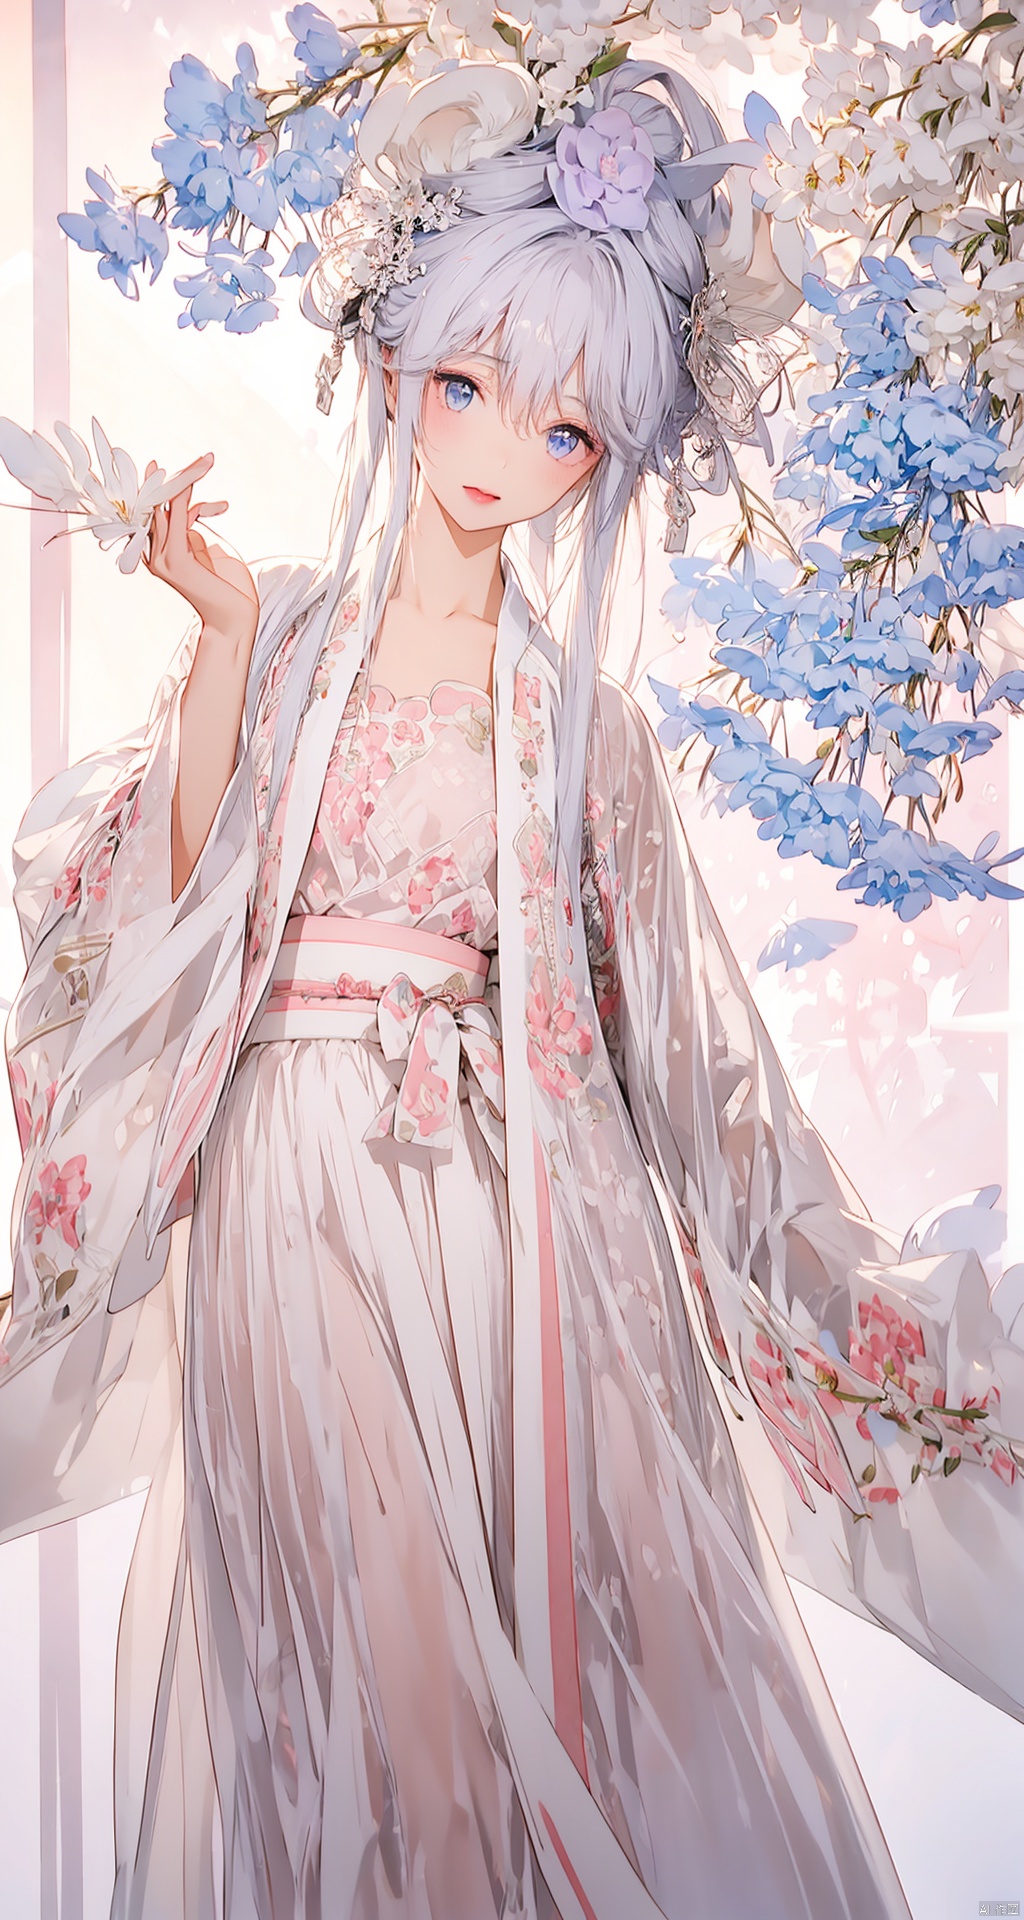  1 girl, white Hanfu, rapeseed flower field, perfect face, walking, 7-point lens, clear portrait, high-definition, 8k, high-resolution, hanfu, 1girl